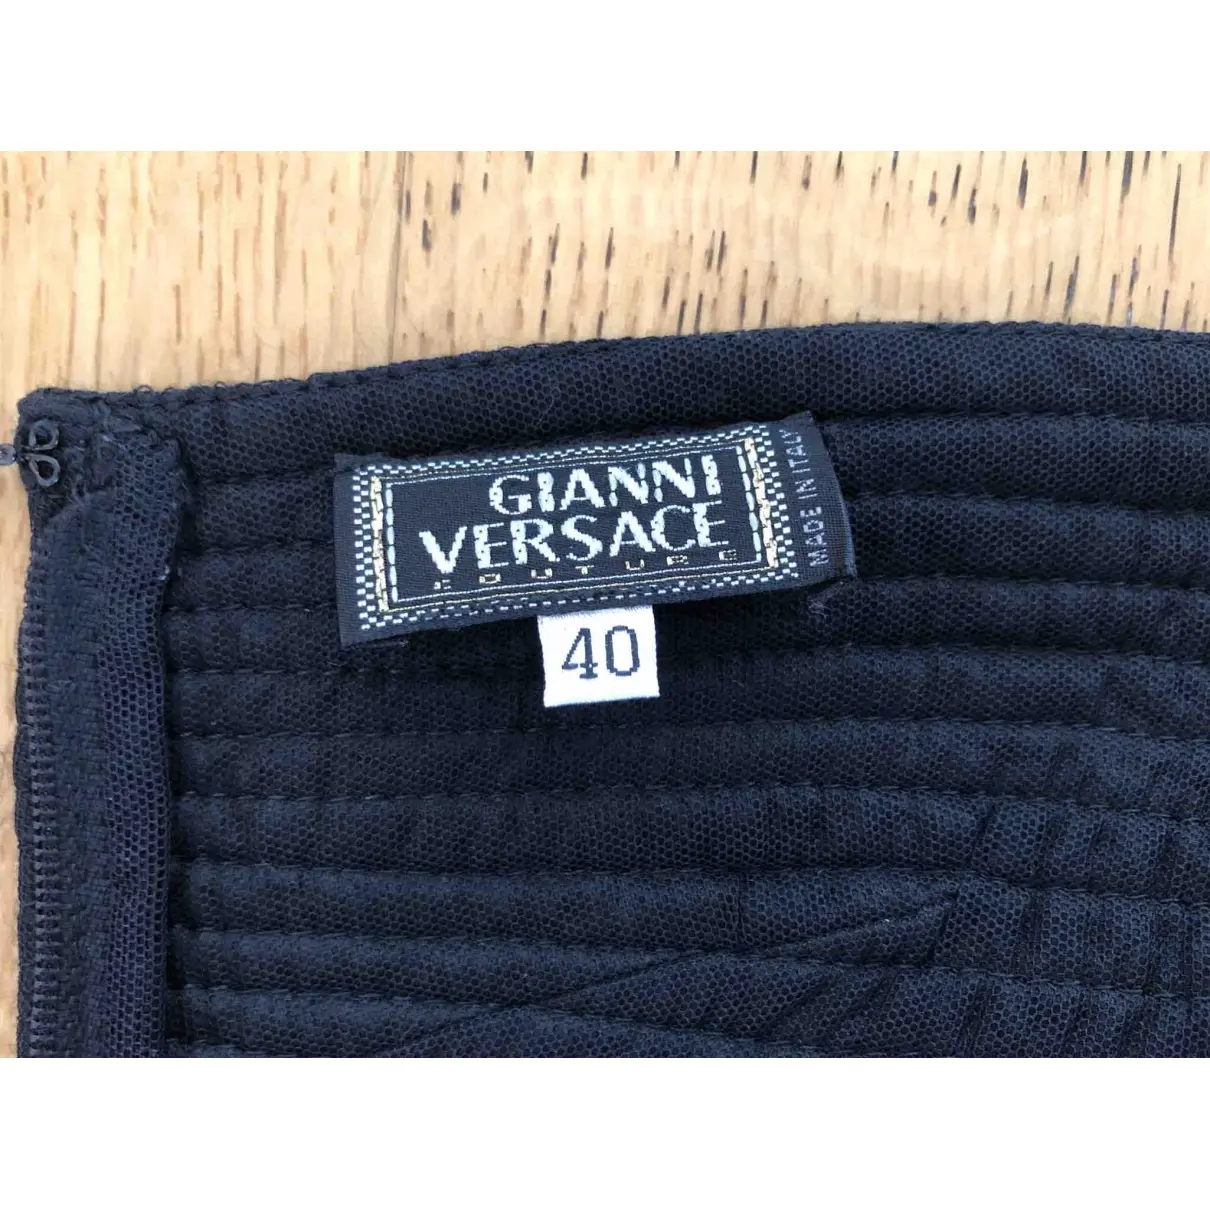 Buy Gianni Versace Black Polyamide Top online - Vintage